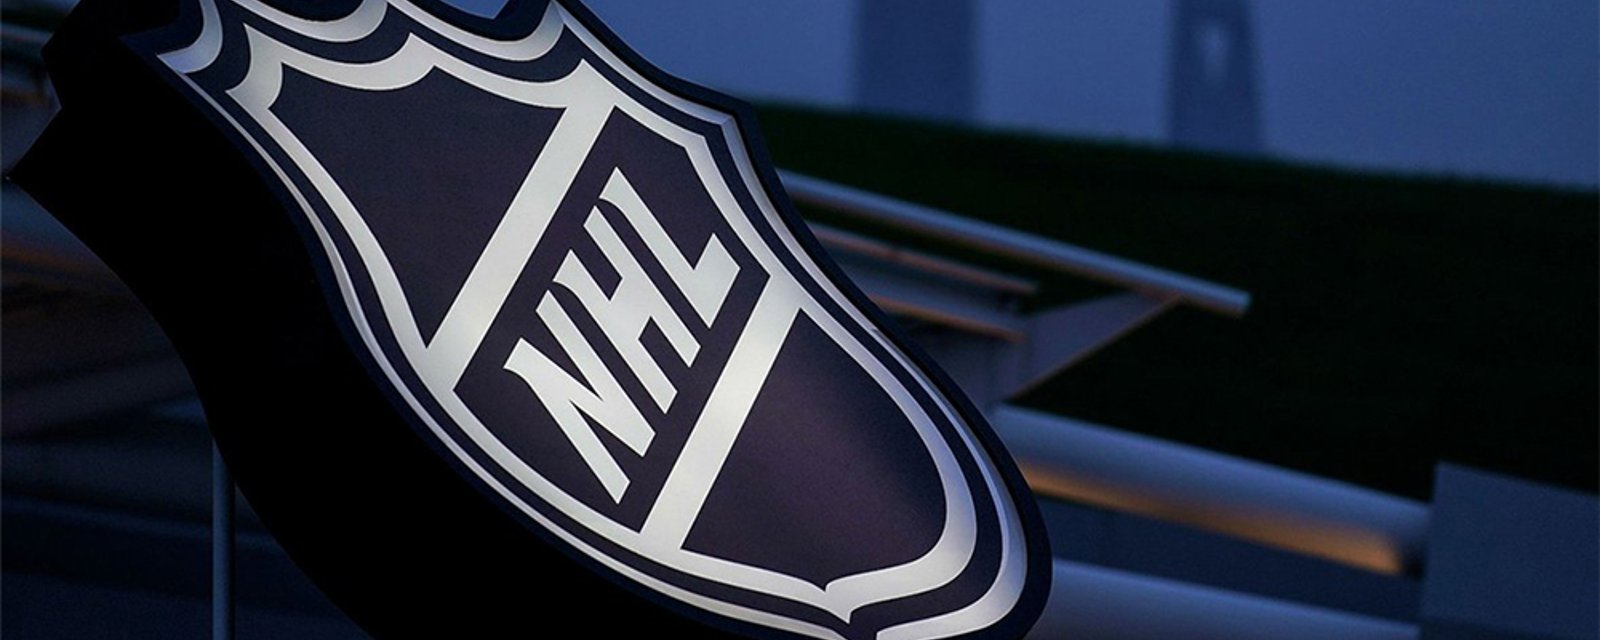 Report: NHL to suspend 2019-20 season